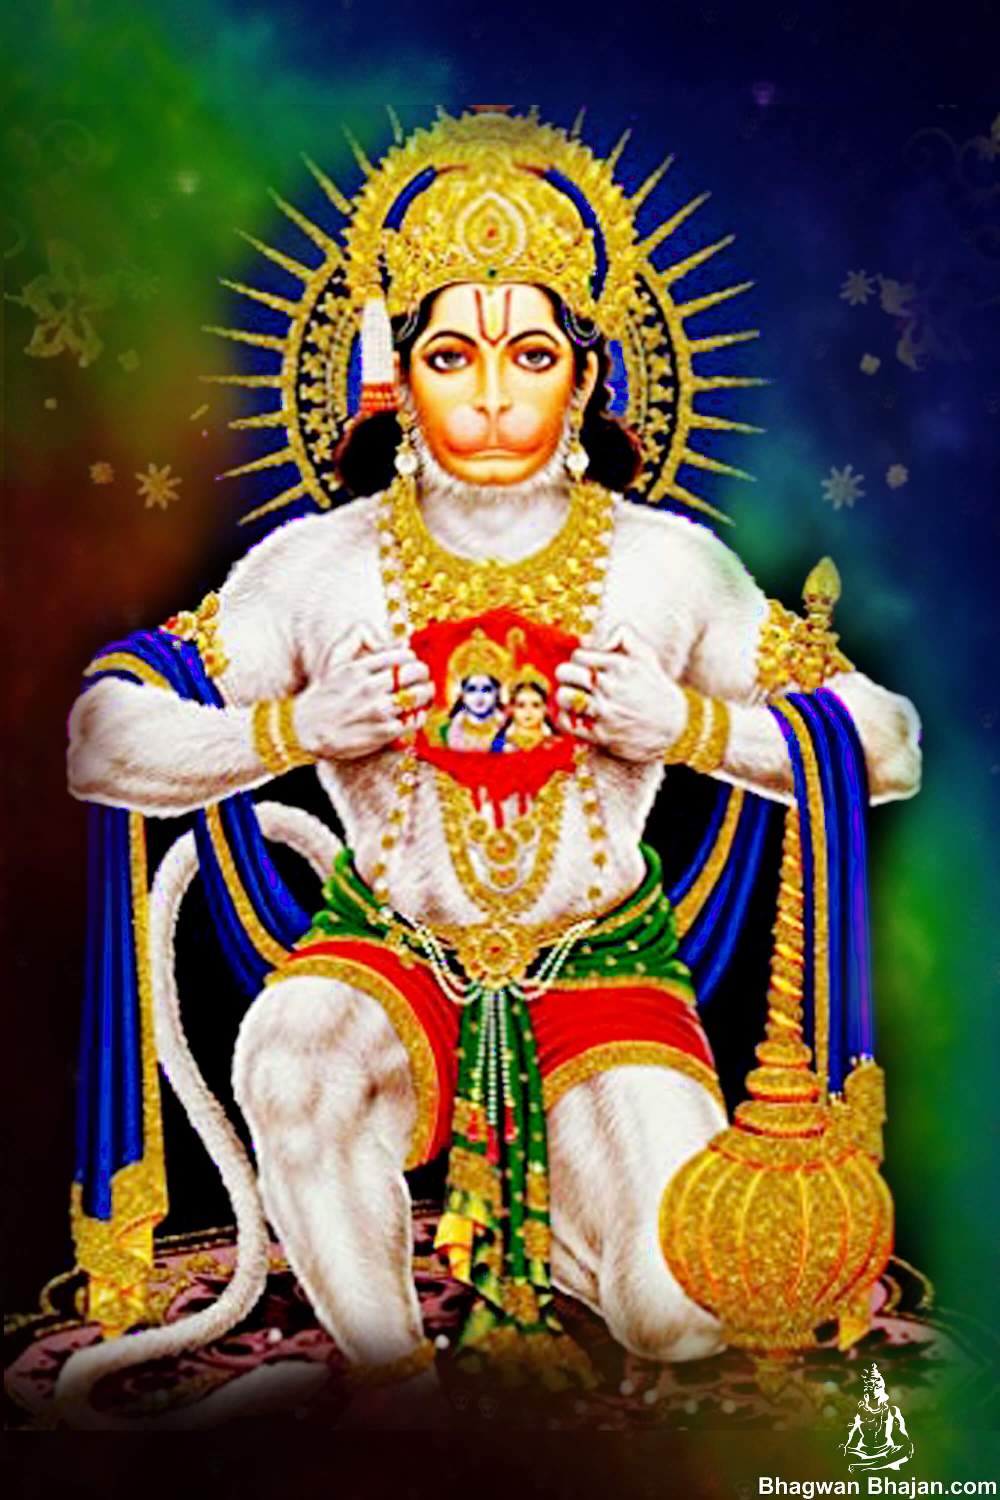 Bhagwan Hanuman Wallpaper Download. Hanuman Ji Photo, Image. Bajrangbali HD Image. Sankatmochan Hanuman Wallpaper & Image